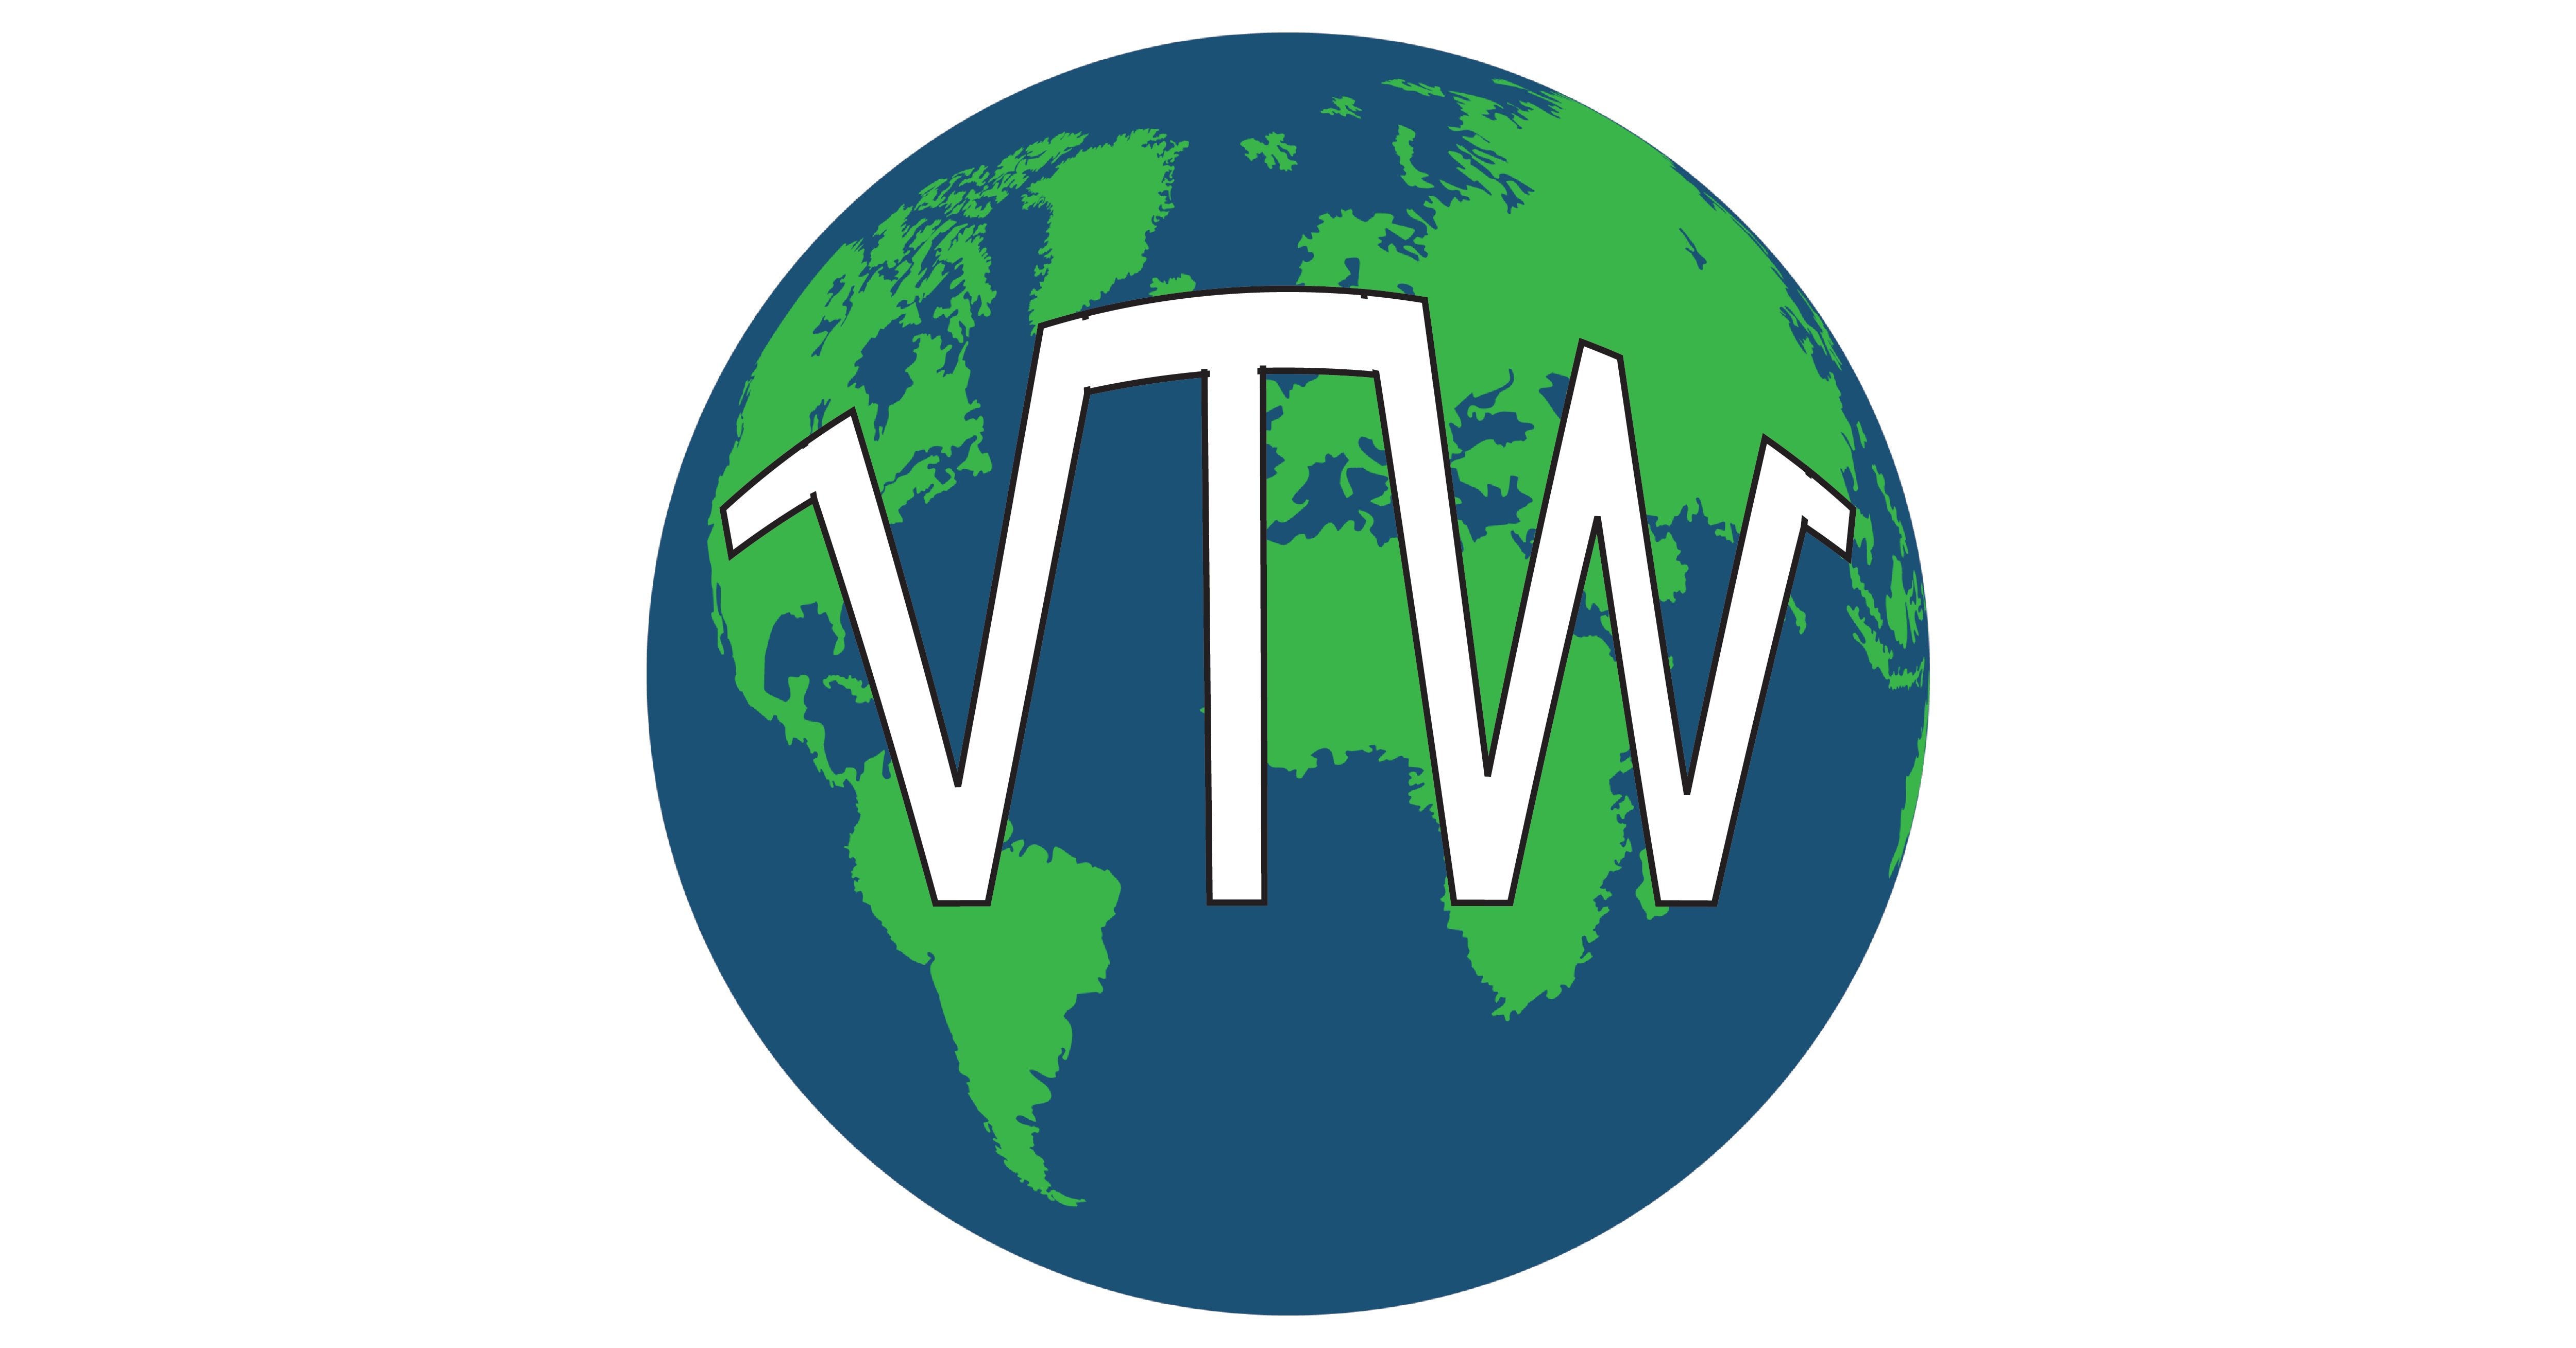 world wide web logo 1990